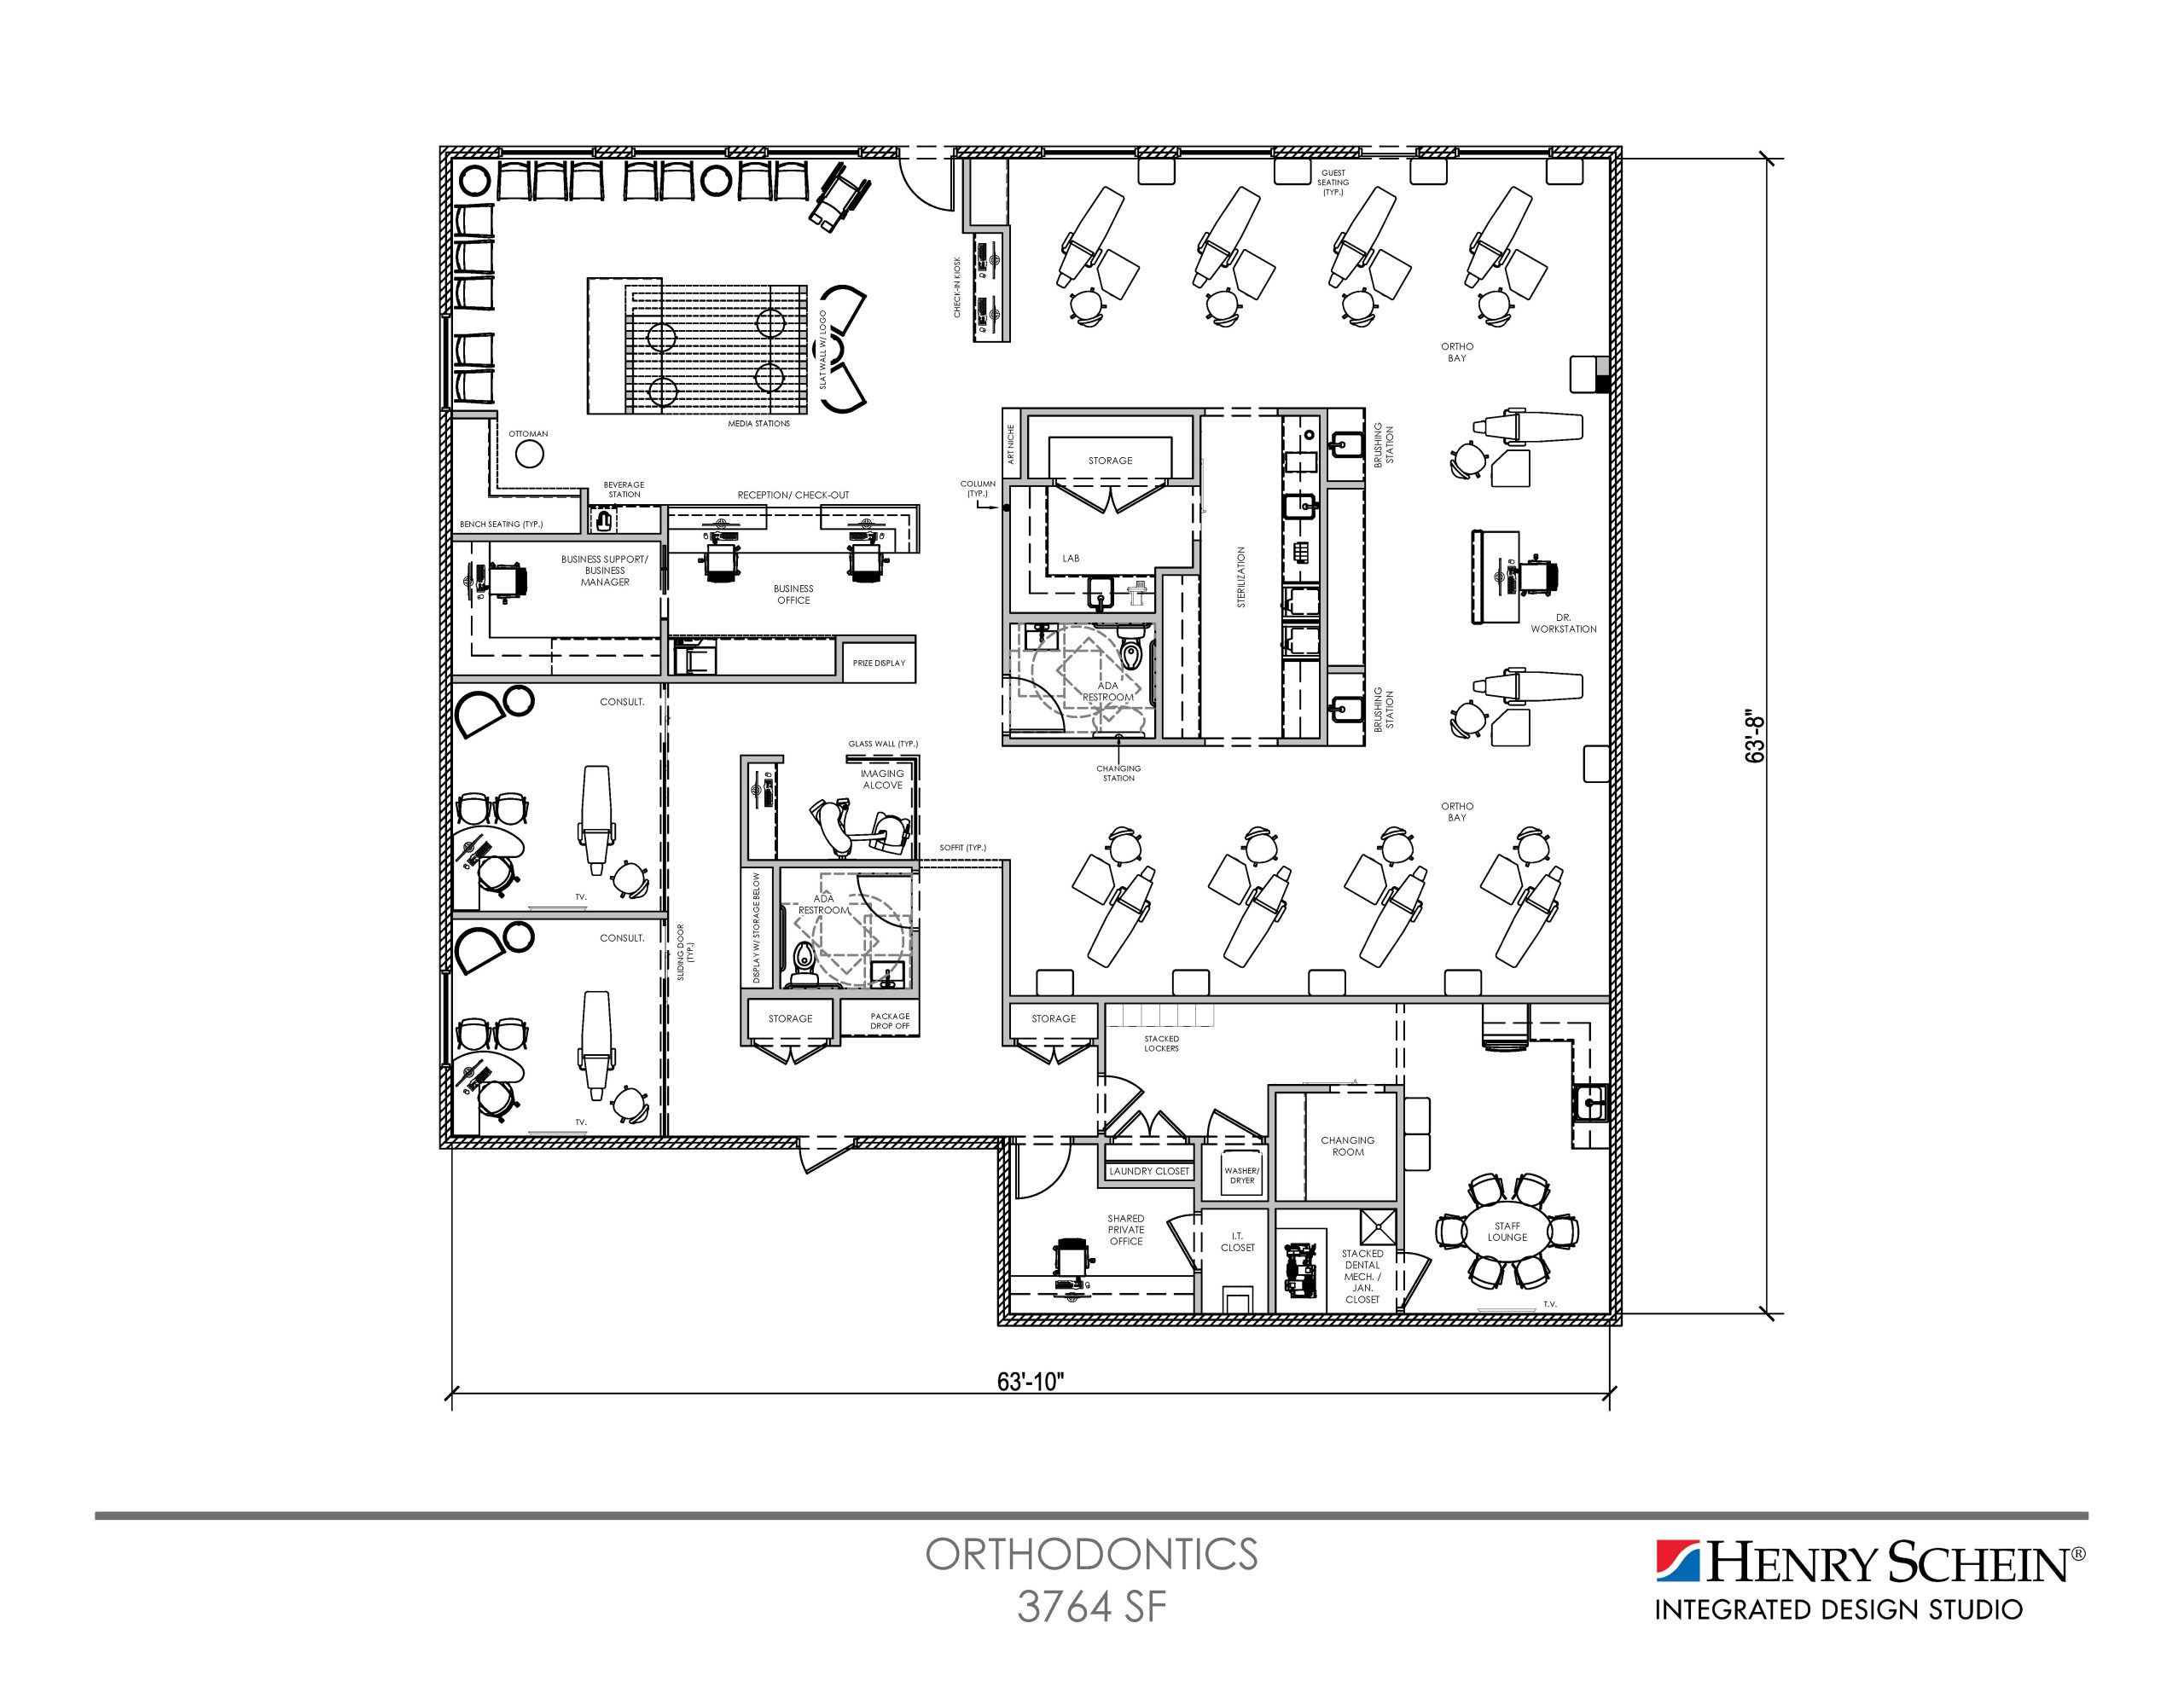 Floor Plan Diagram of 3764 square foot orthodontic practice